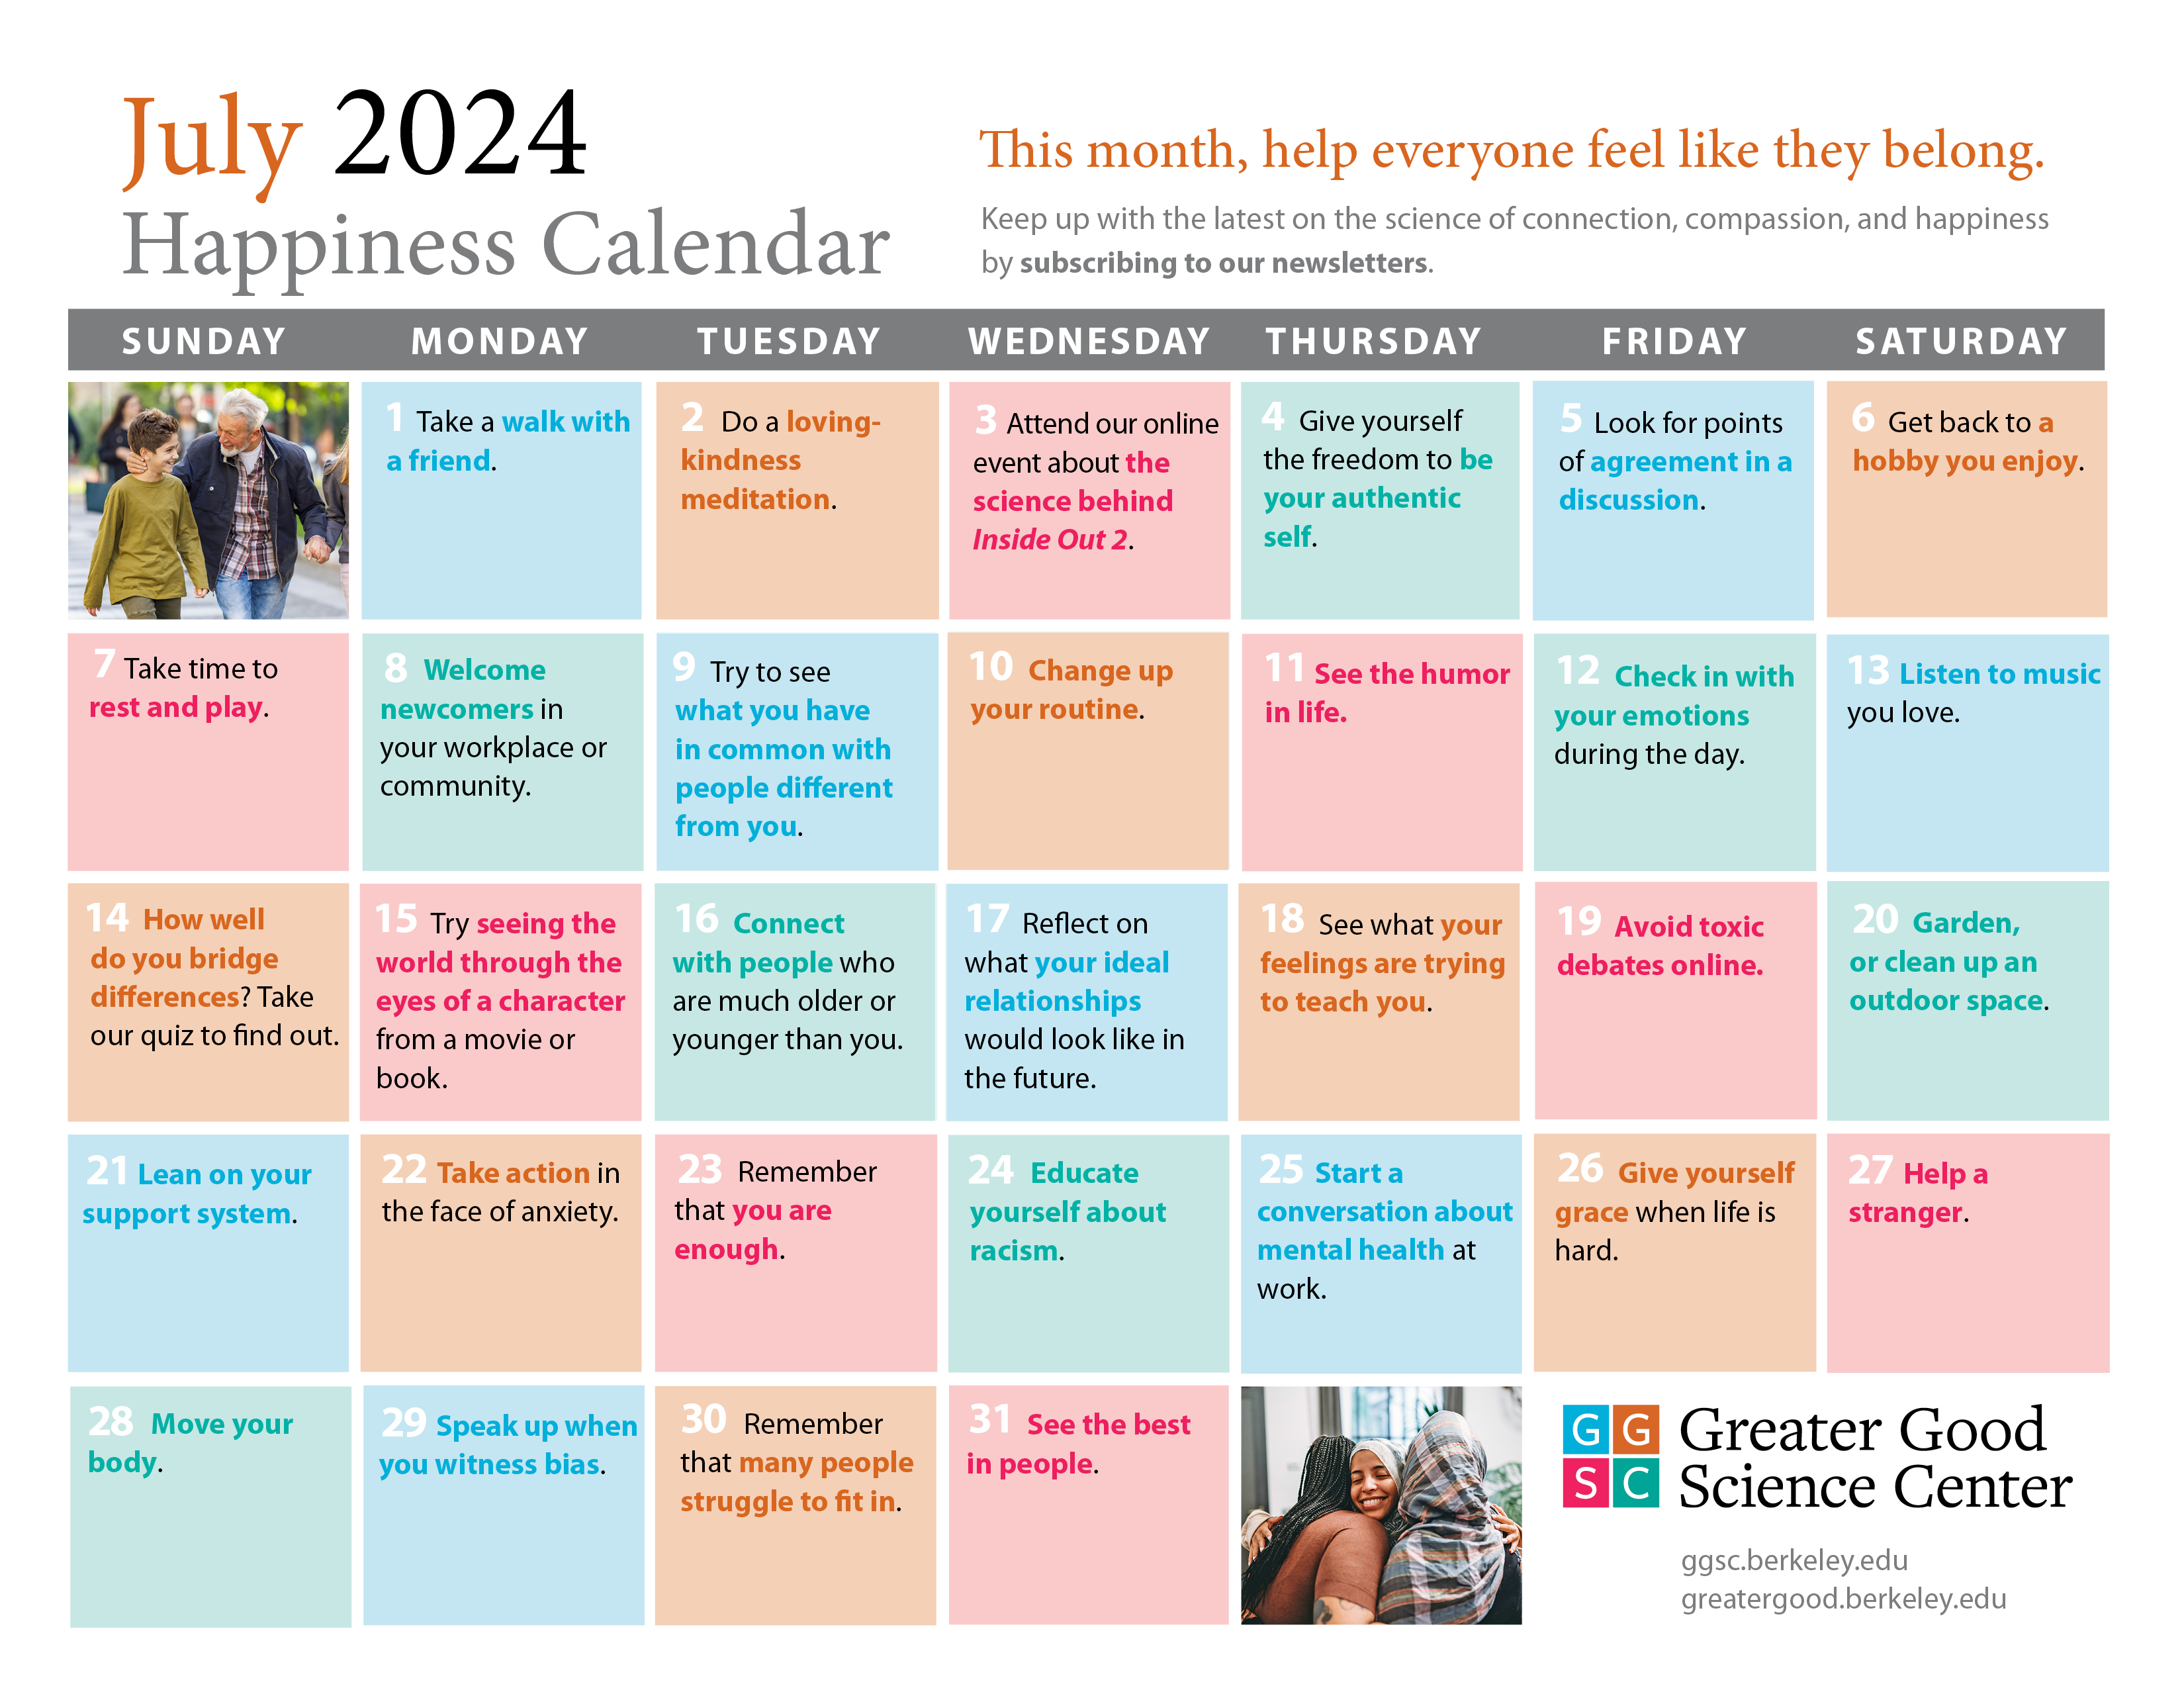 July 2024 happiness calendar